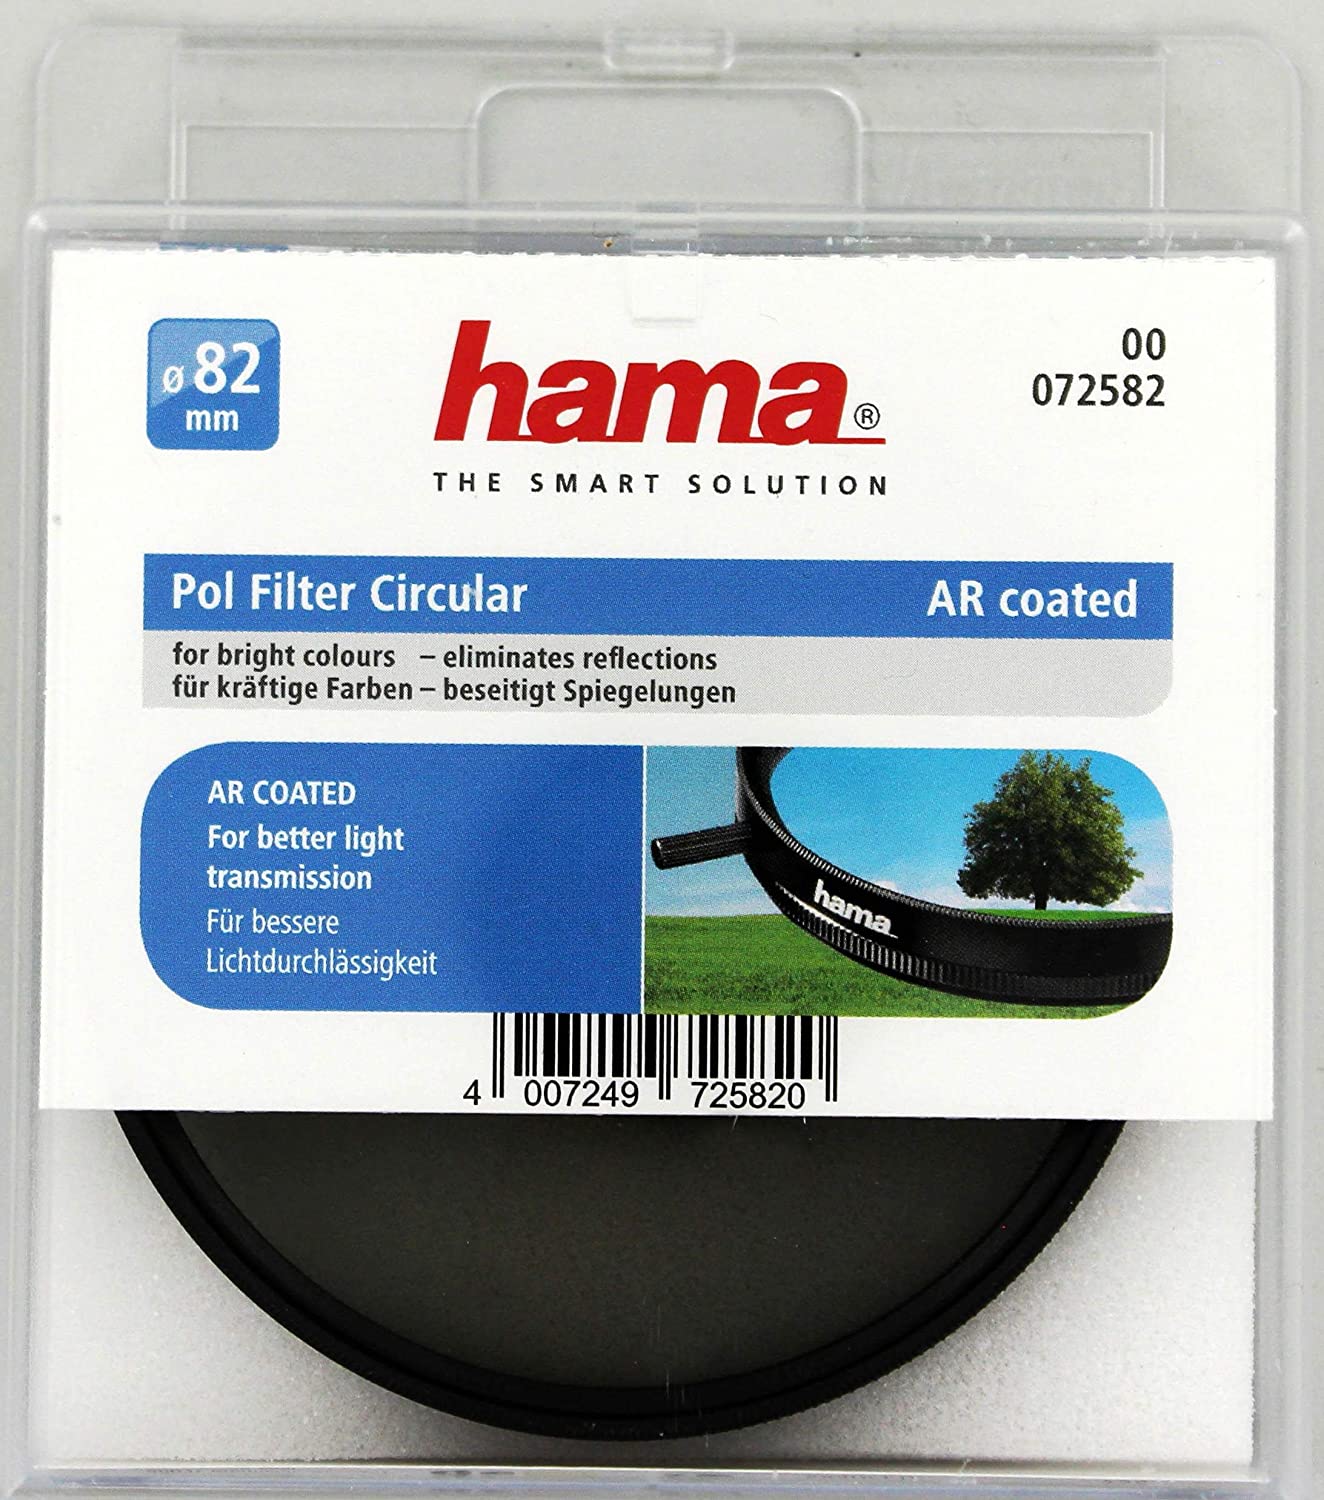 Hama Polarizing Filter Circular AR Coated 82.0 mm